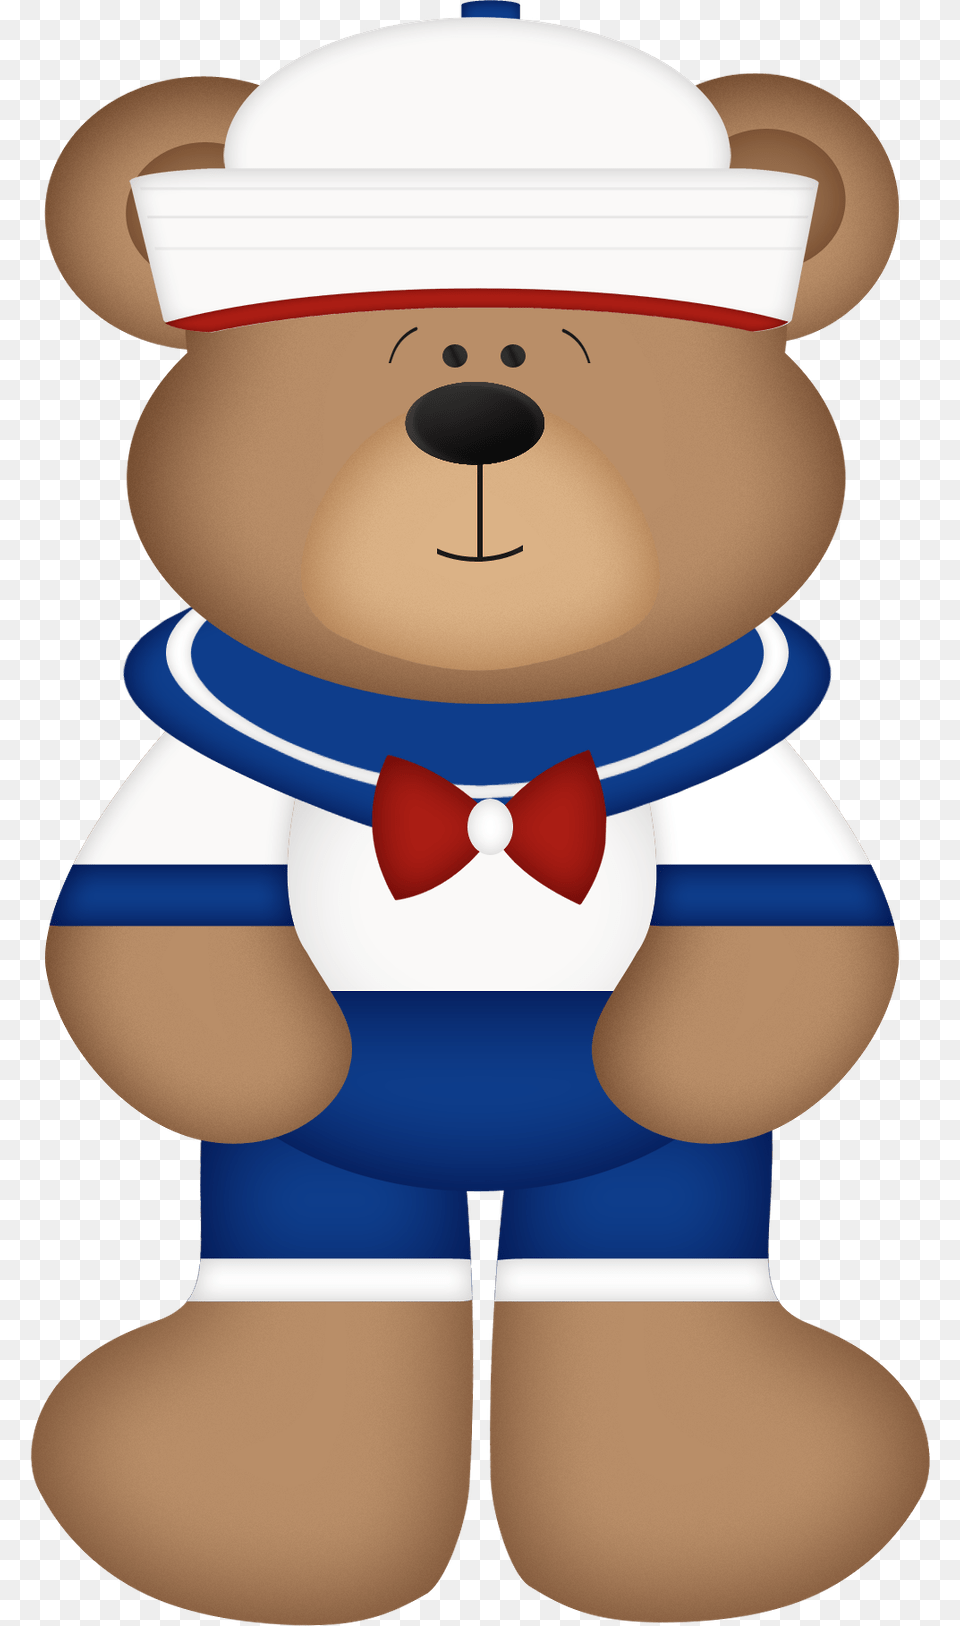 Sailor Bear, Accessories, Formal Wear, Tie, Teddy Bear Png Image